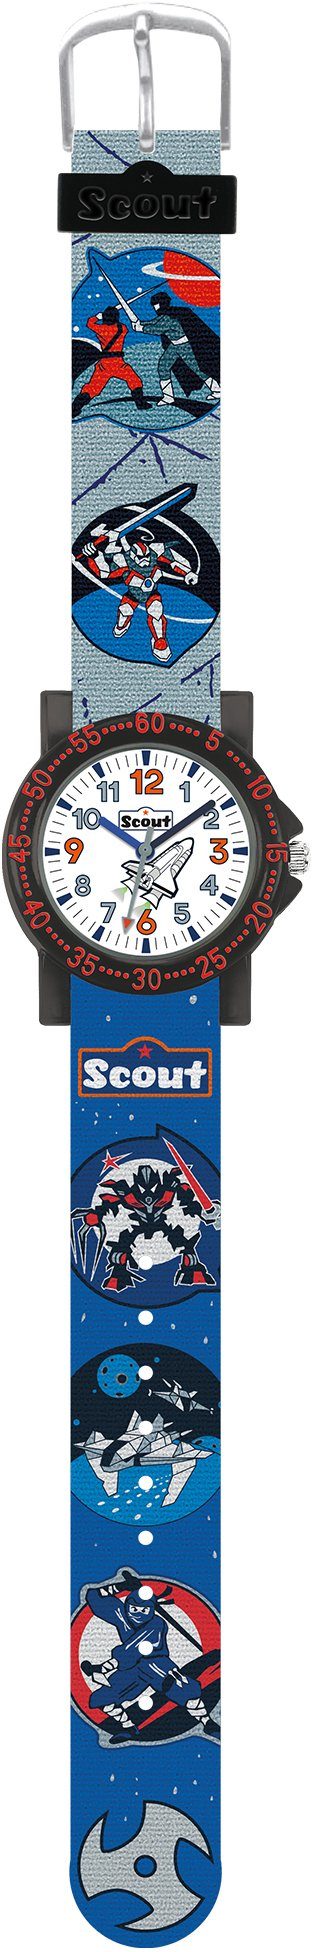 Scout Quarzuhr The Lernuhr, als 280375026, ideal IT-Collection, Geschenk auch